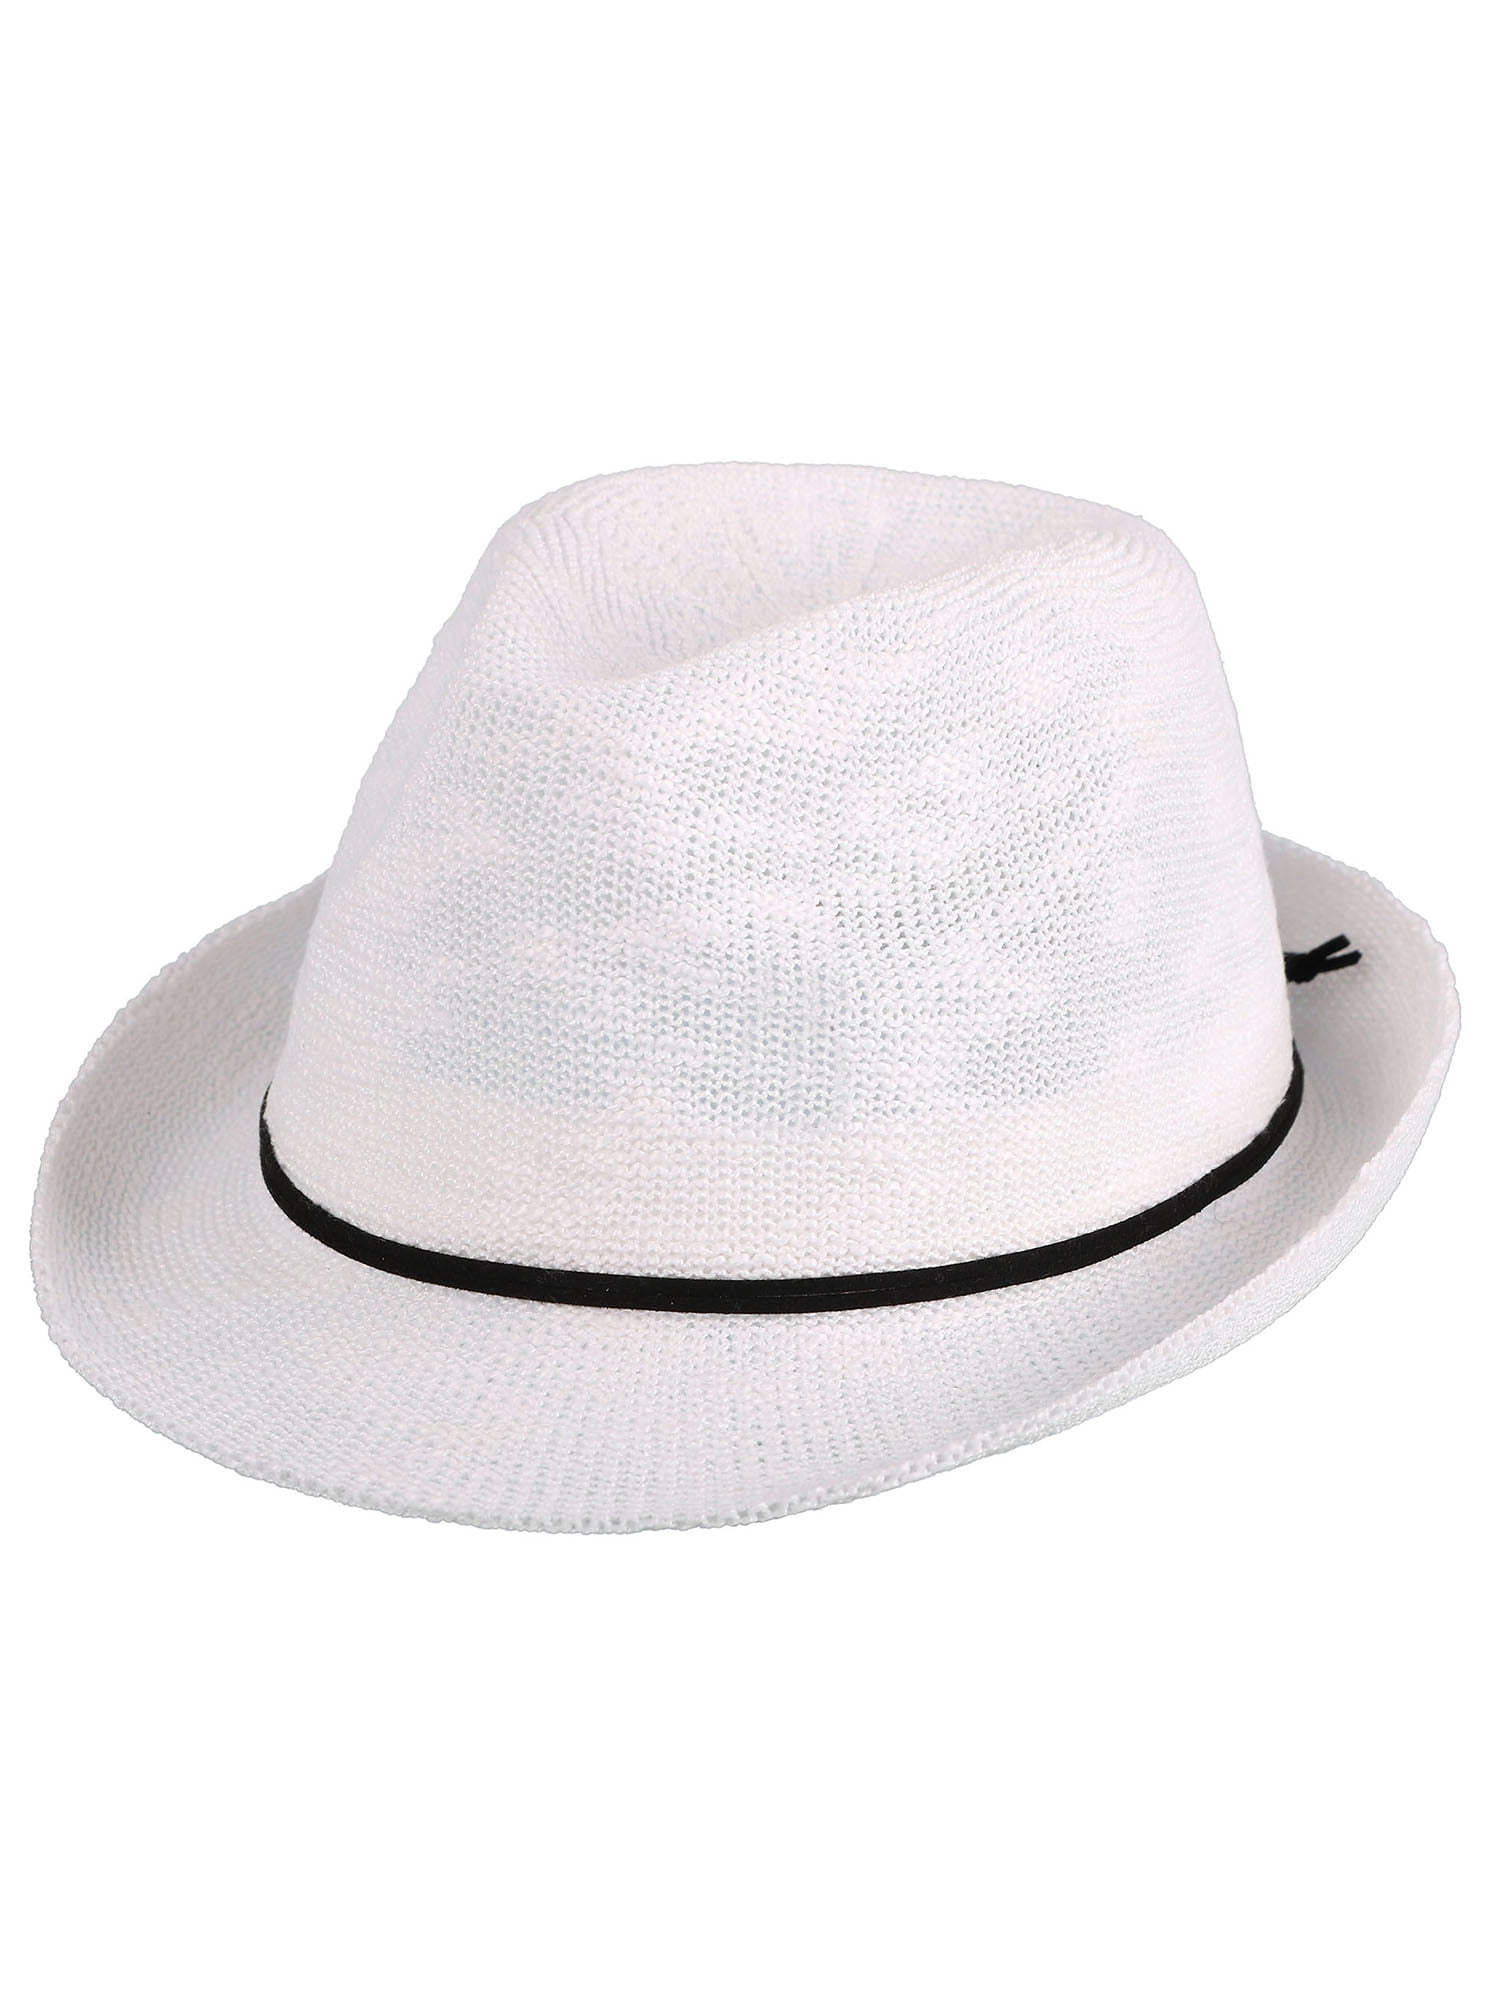 Men Women Summer Woven Straw Trilby Fedora Hat in Ivory Tan Black